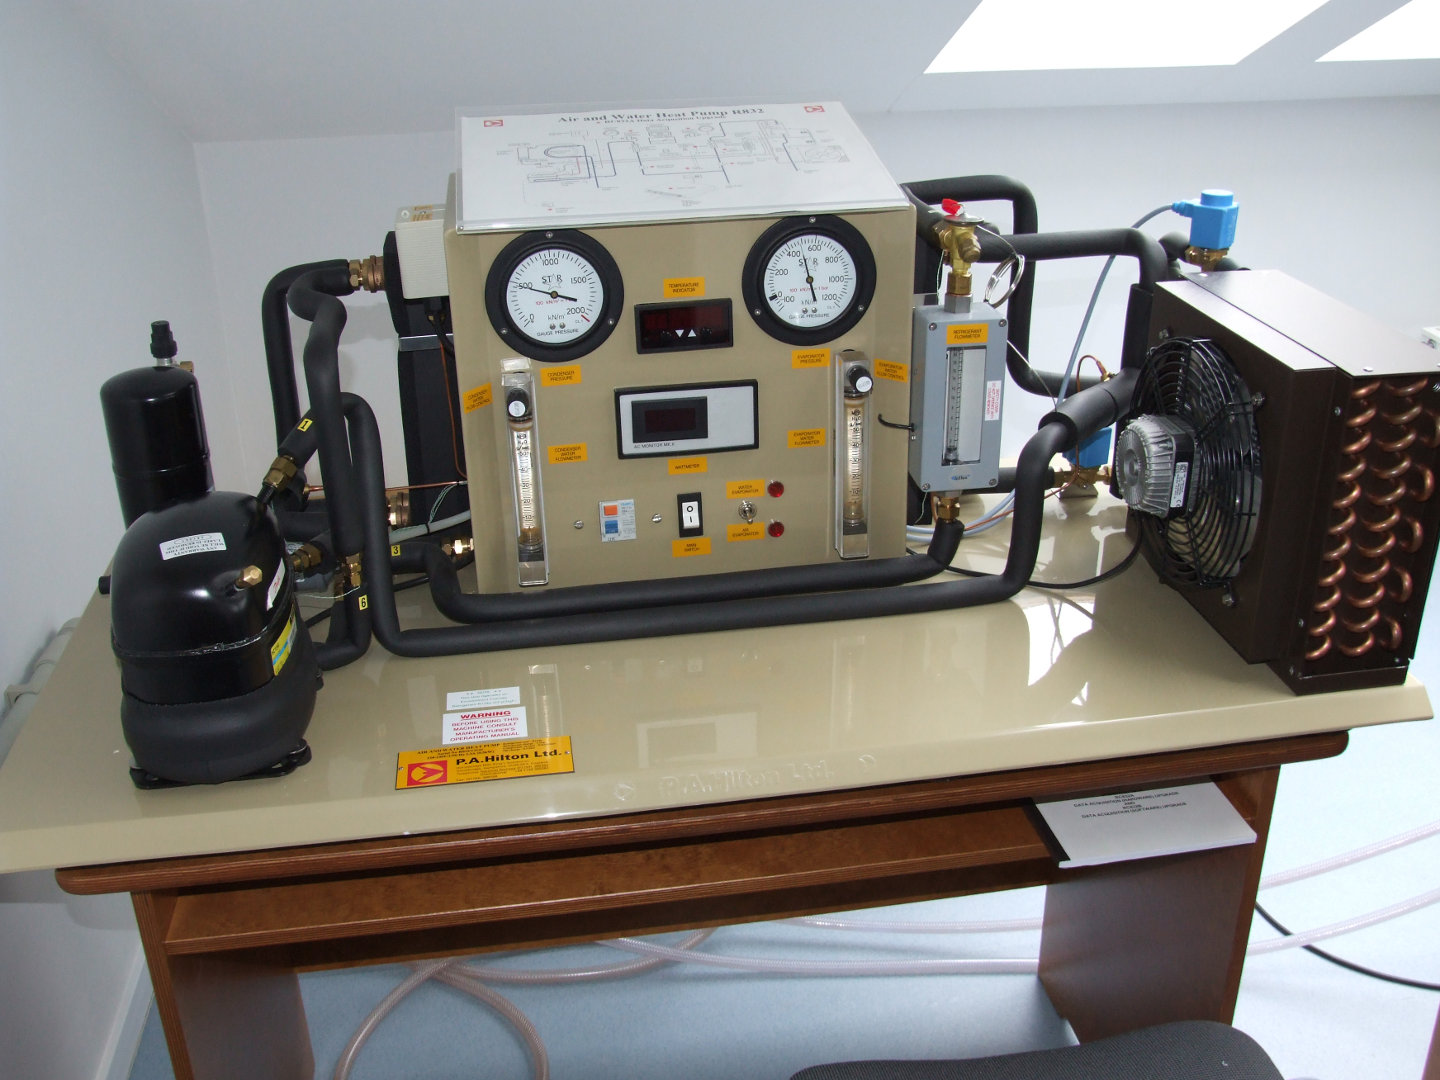 Heat transfer process demonstration kit